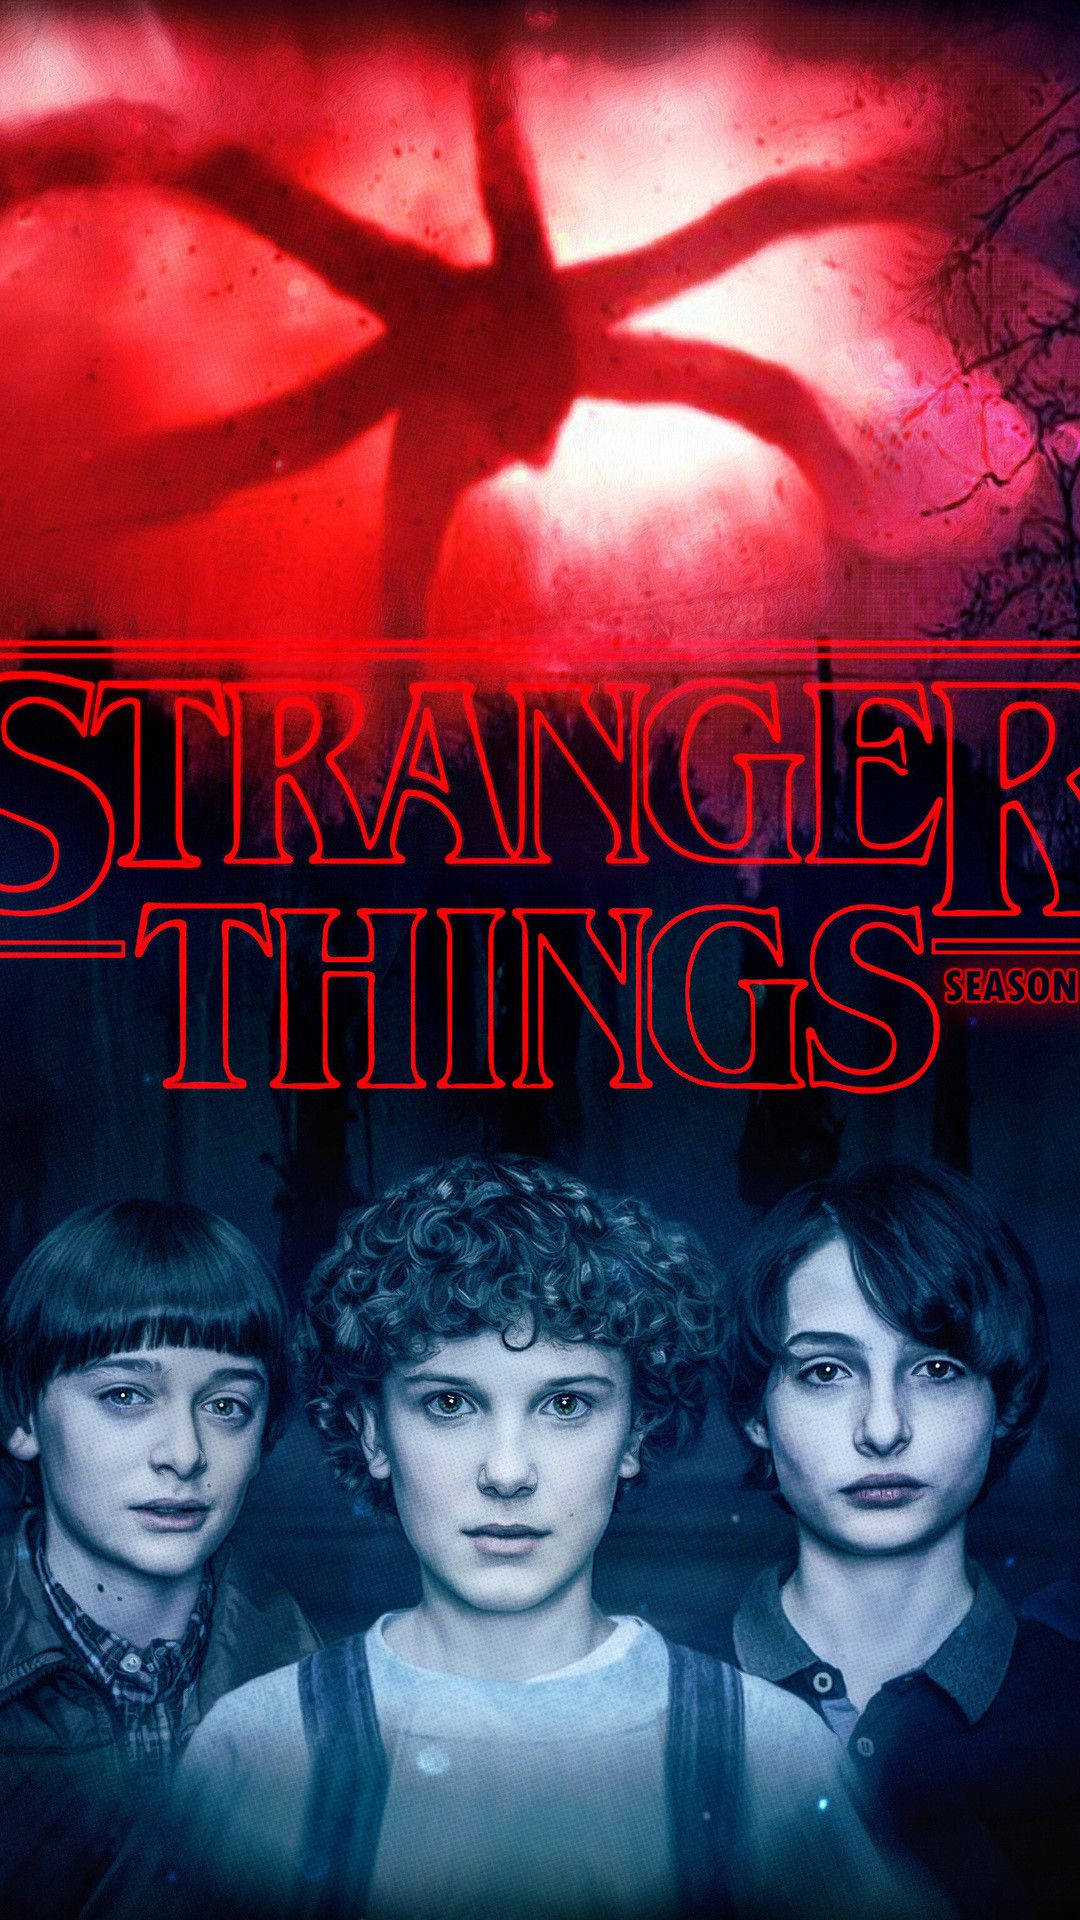 Cute Stranger Things Season 2 Poster